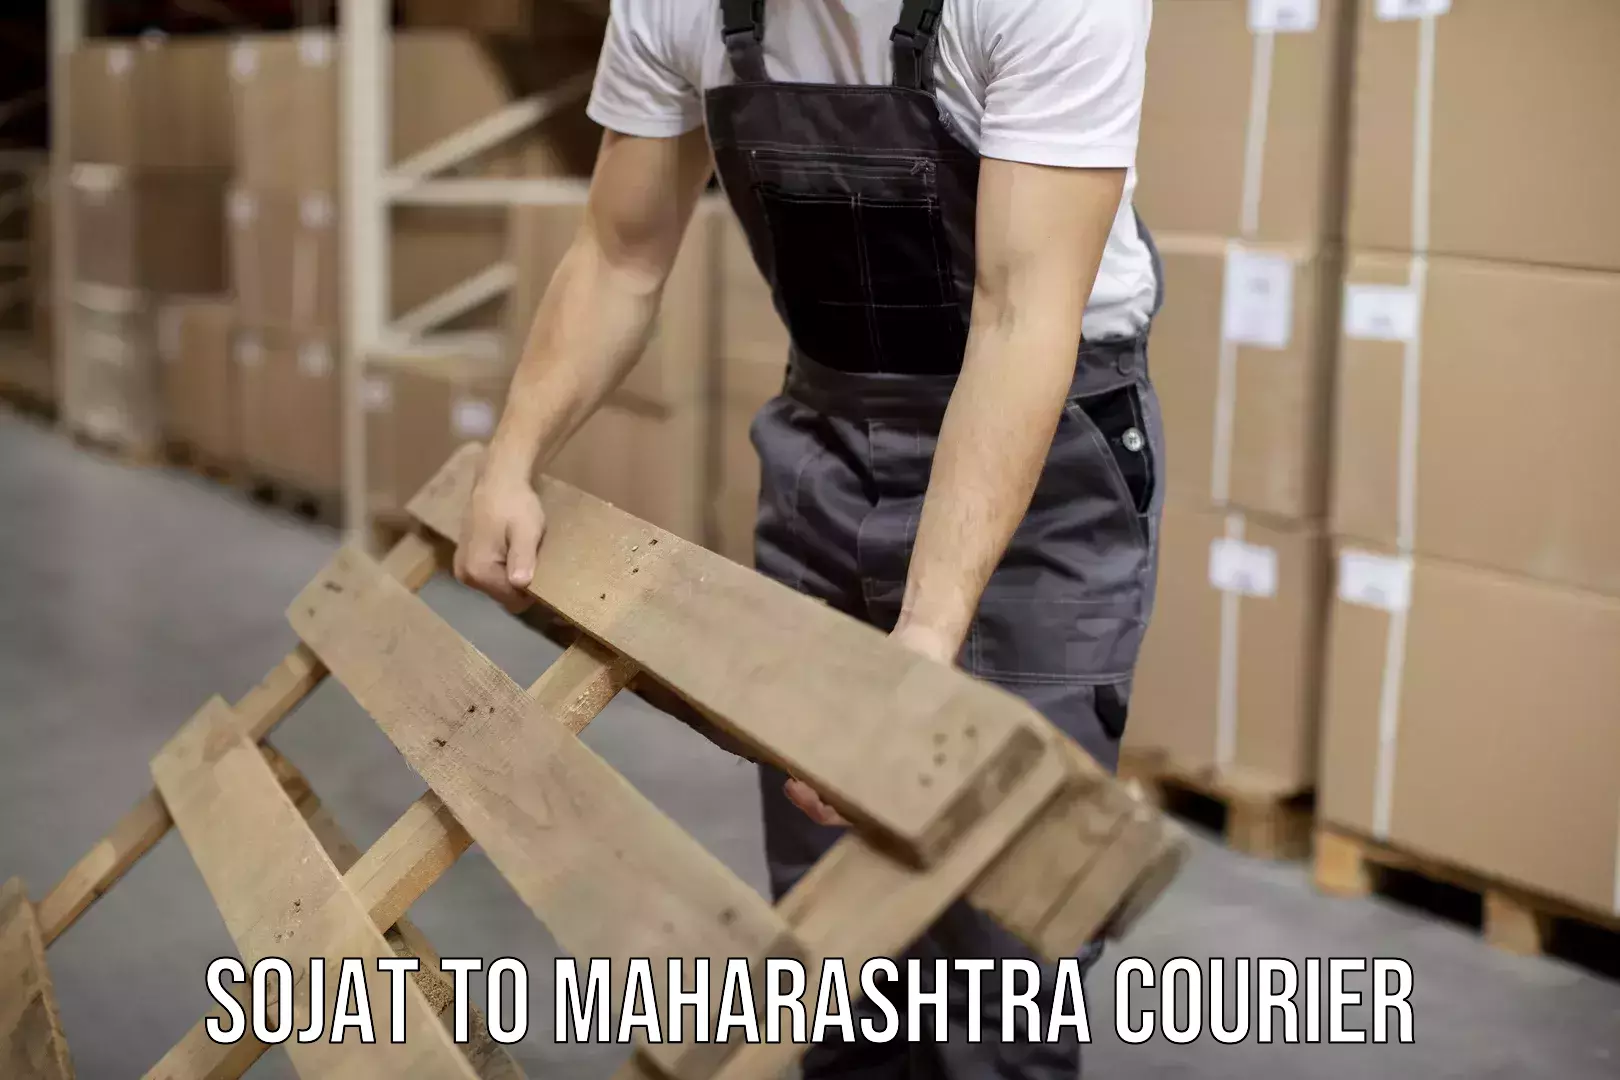 Courier service partnerships in Sojat to Maharashtra